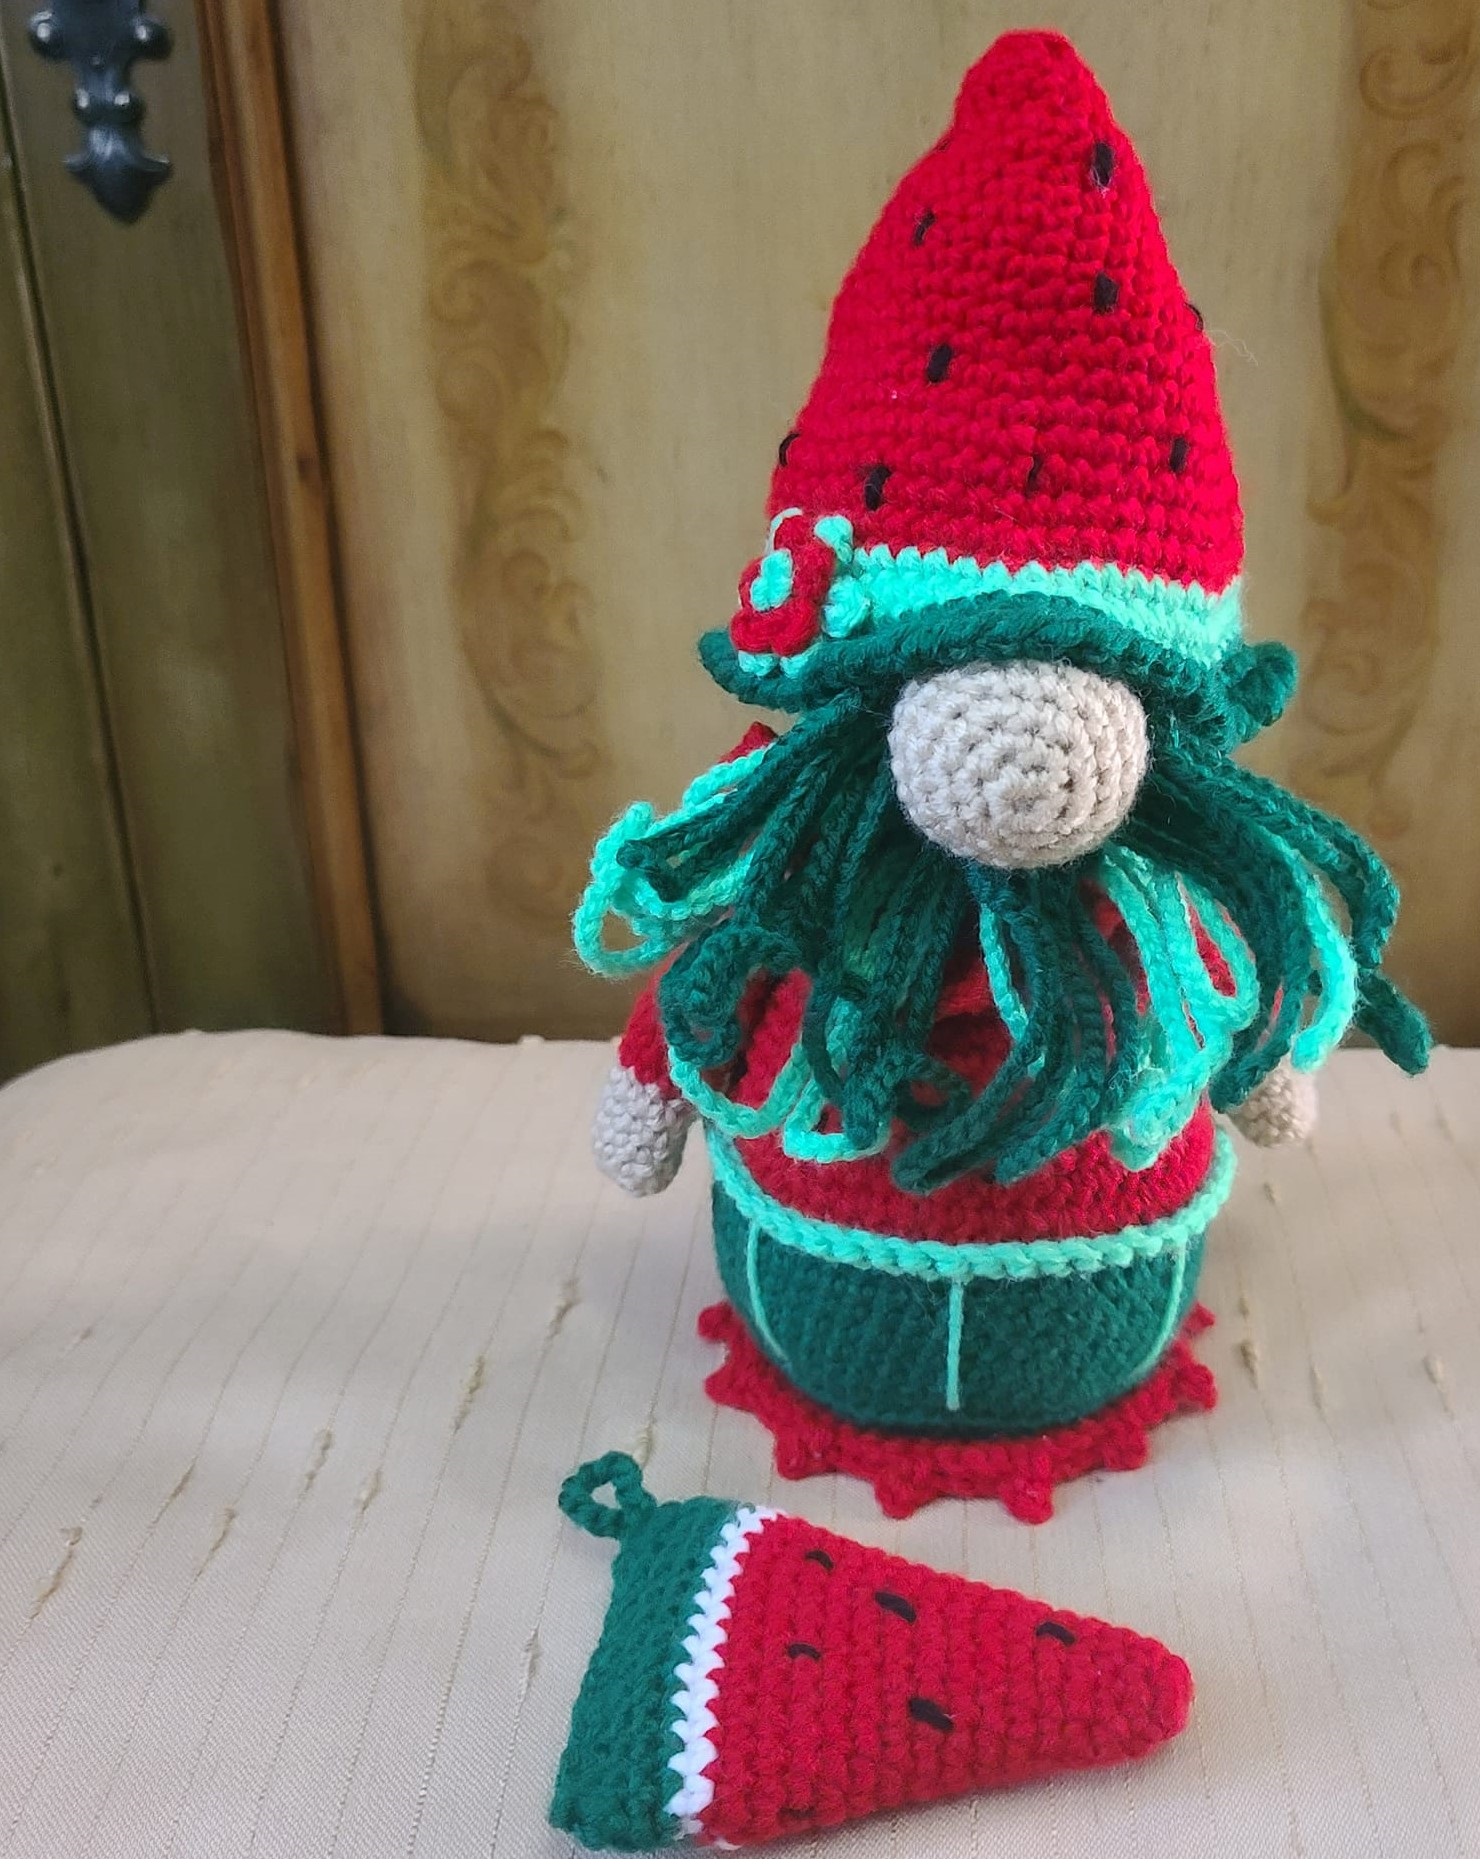 Handmade Crochet Watermelon Gnome, with Pc of watermelon